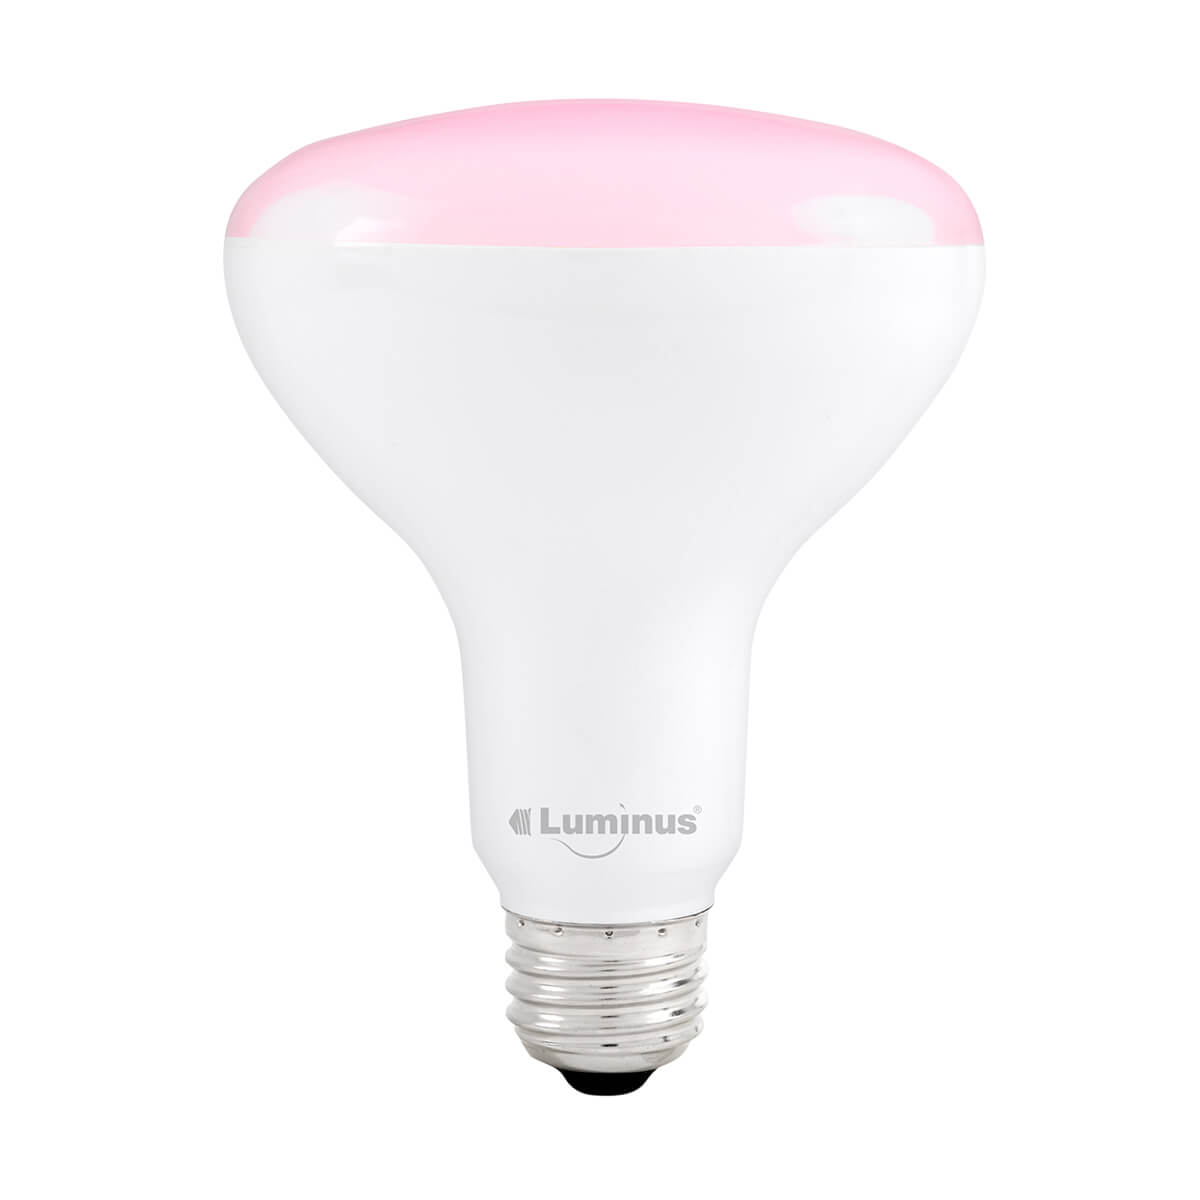 Luminus LED 10W BR30 Grow Light